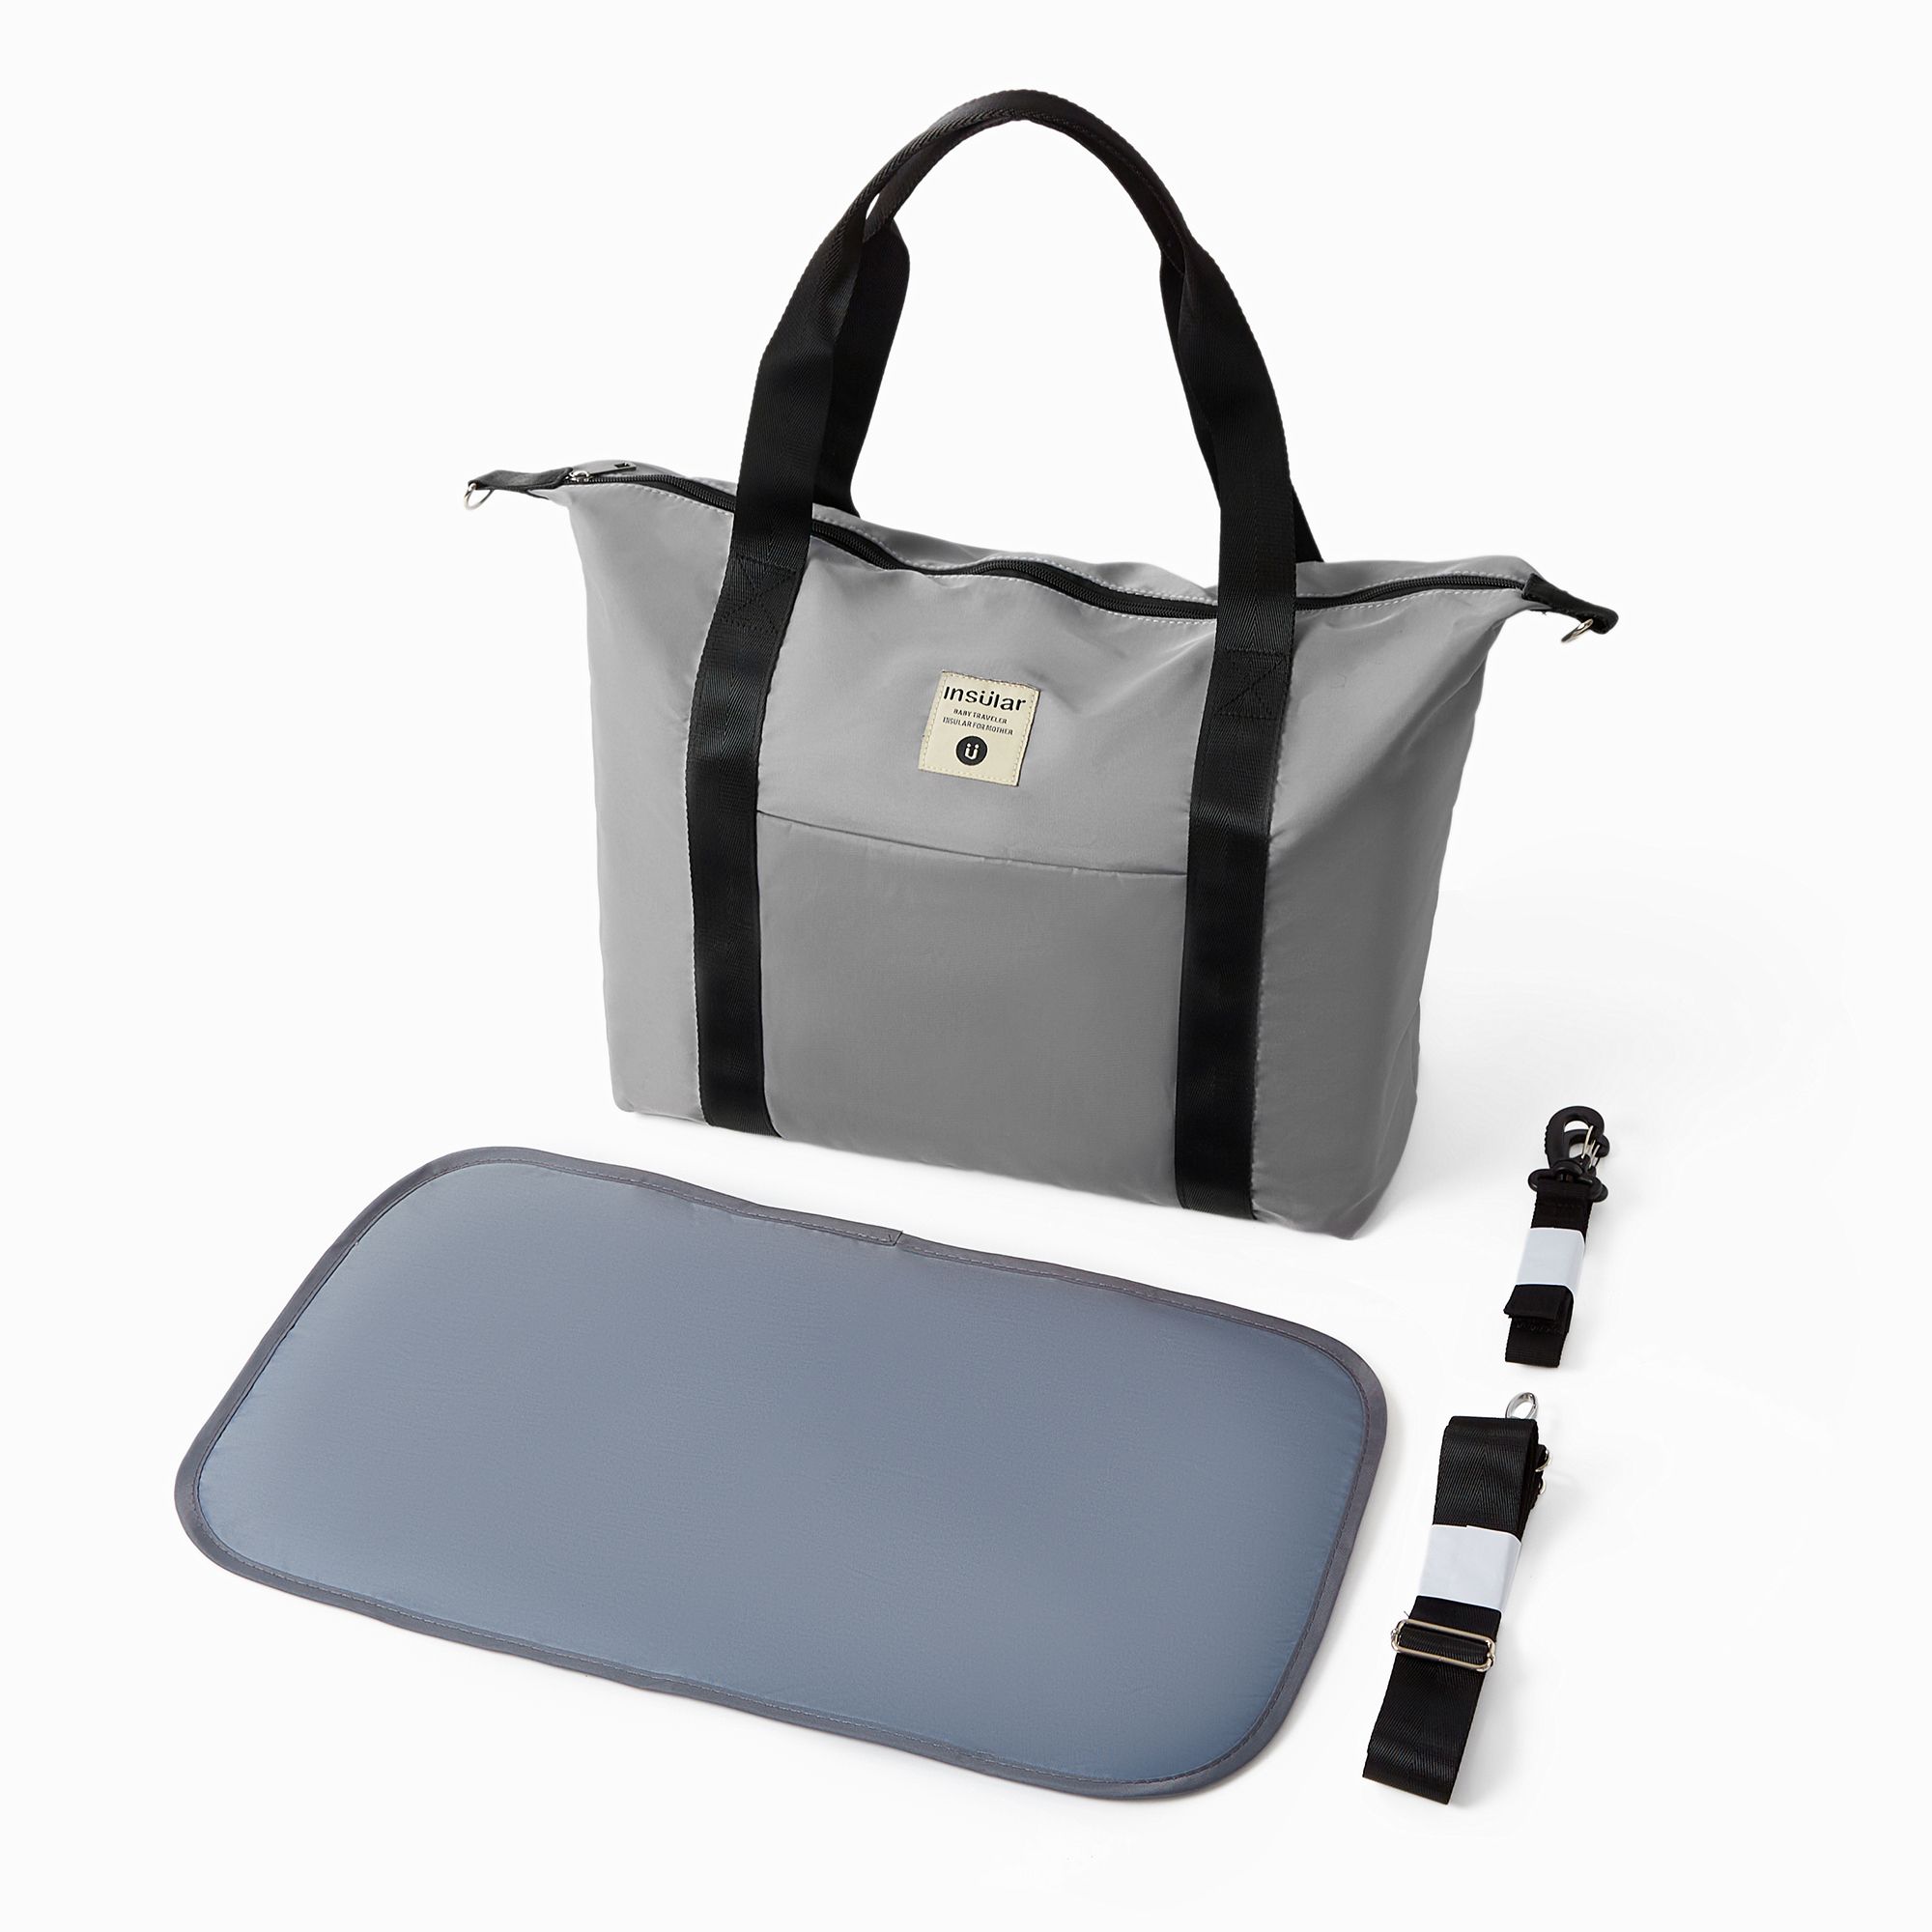 Multi-functional Waterproof Diaper Bag - Large Capacity Shoulder And Cross-body Bag For Moms And Babies